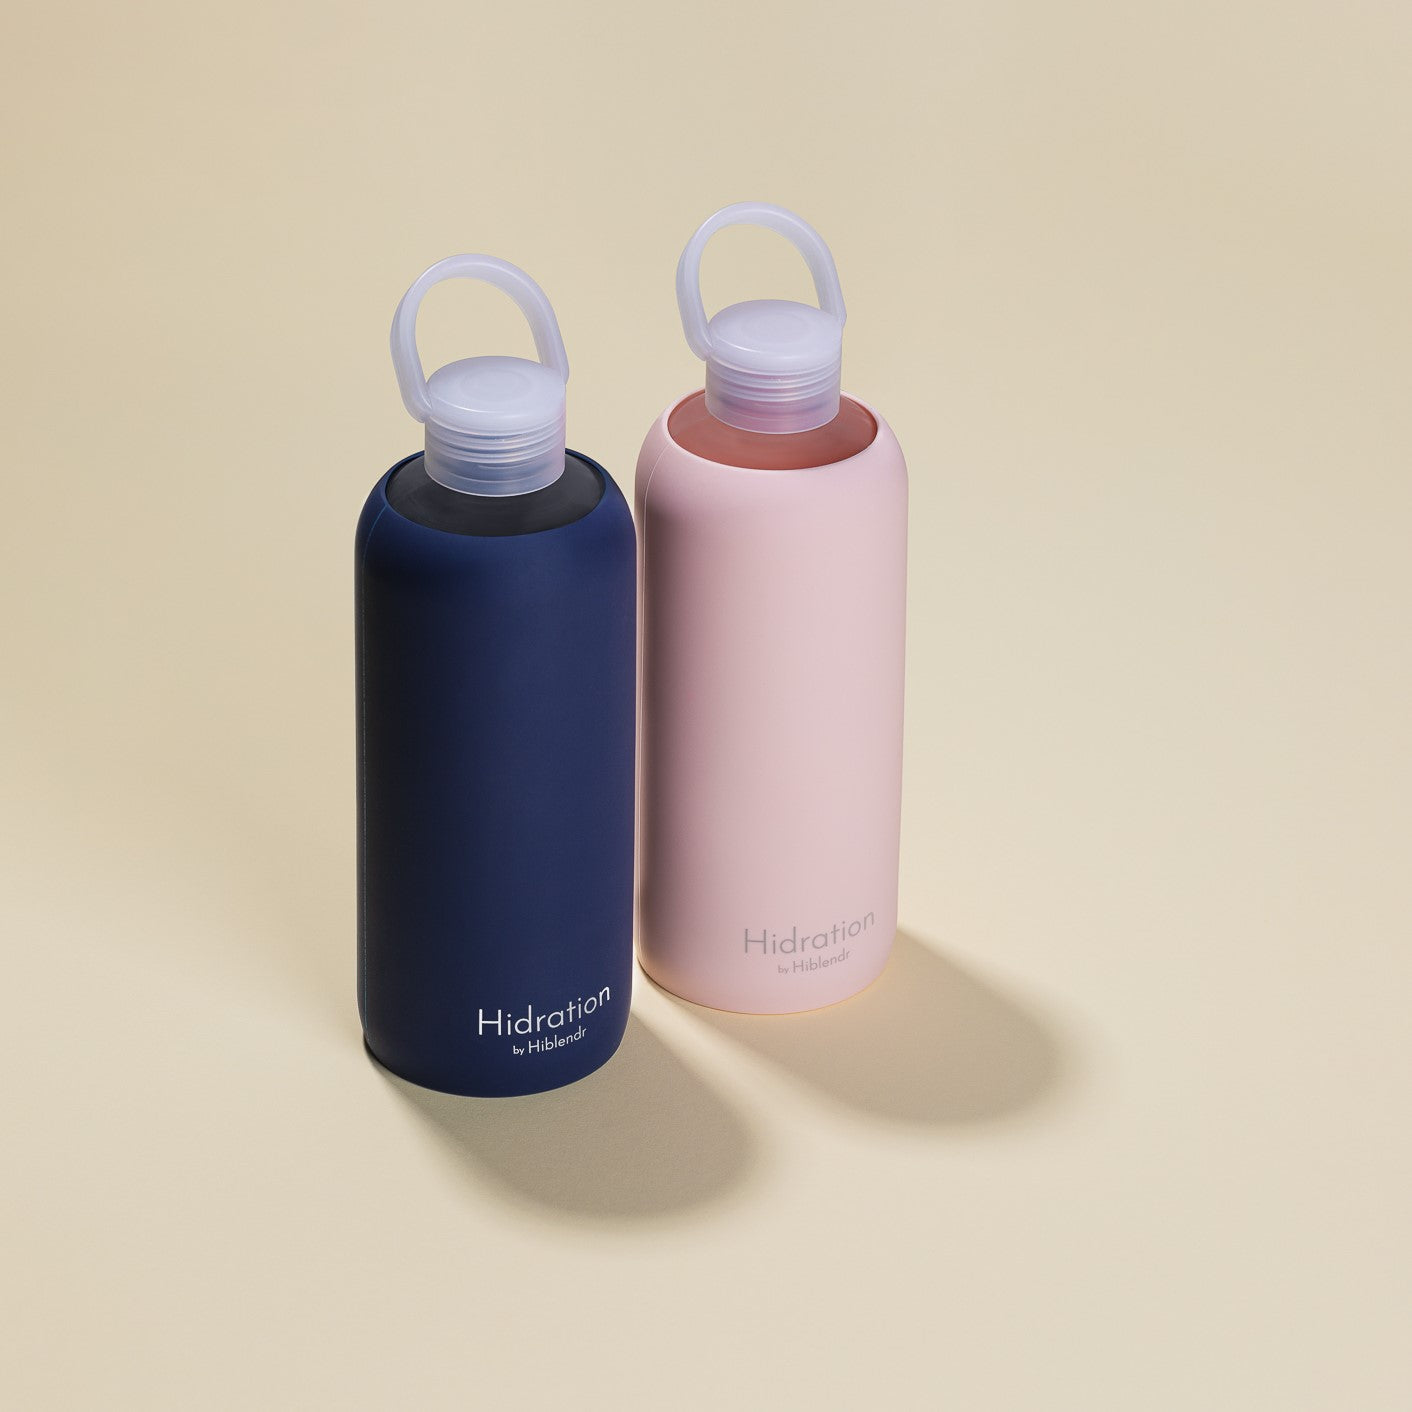 Hidration Glass Water Bottle Bundle - 600ml - HiBlendr